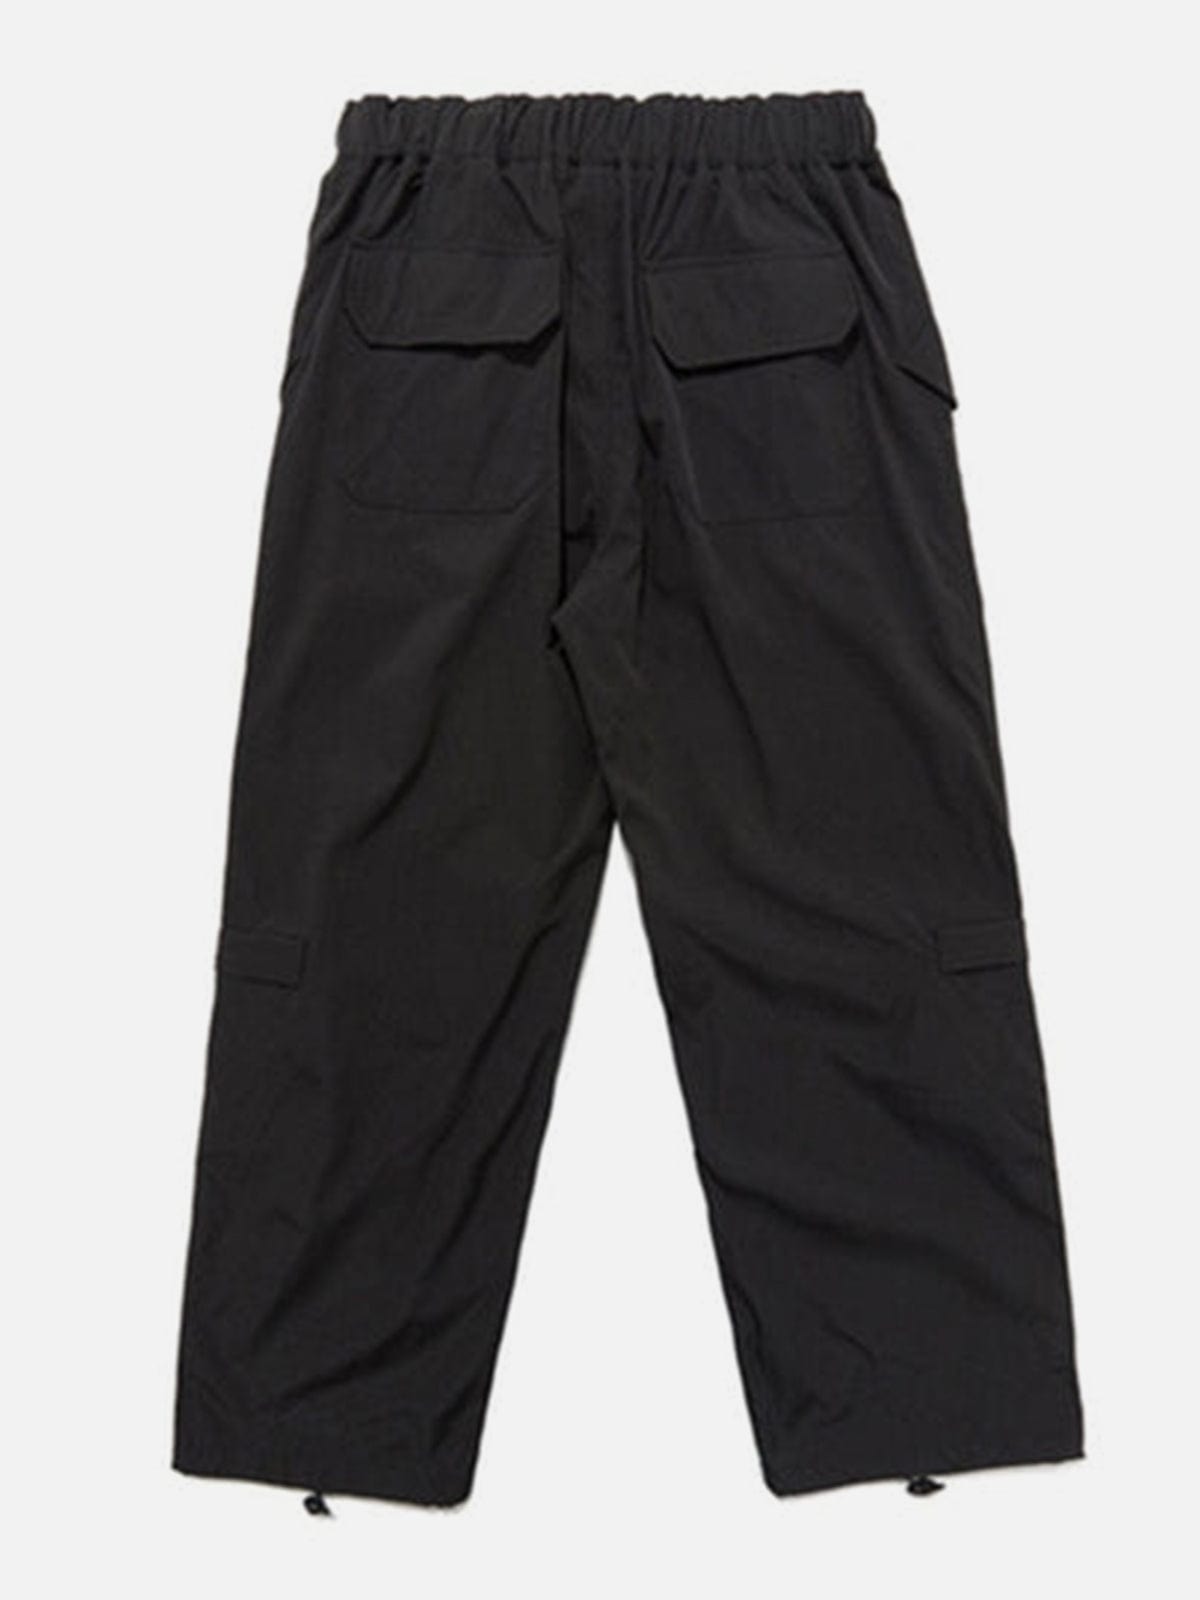 Multi Pockets Zipper Pants Streetwear Brand Techwear Combat Tactical YUGEN THEORY